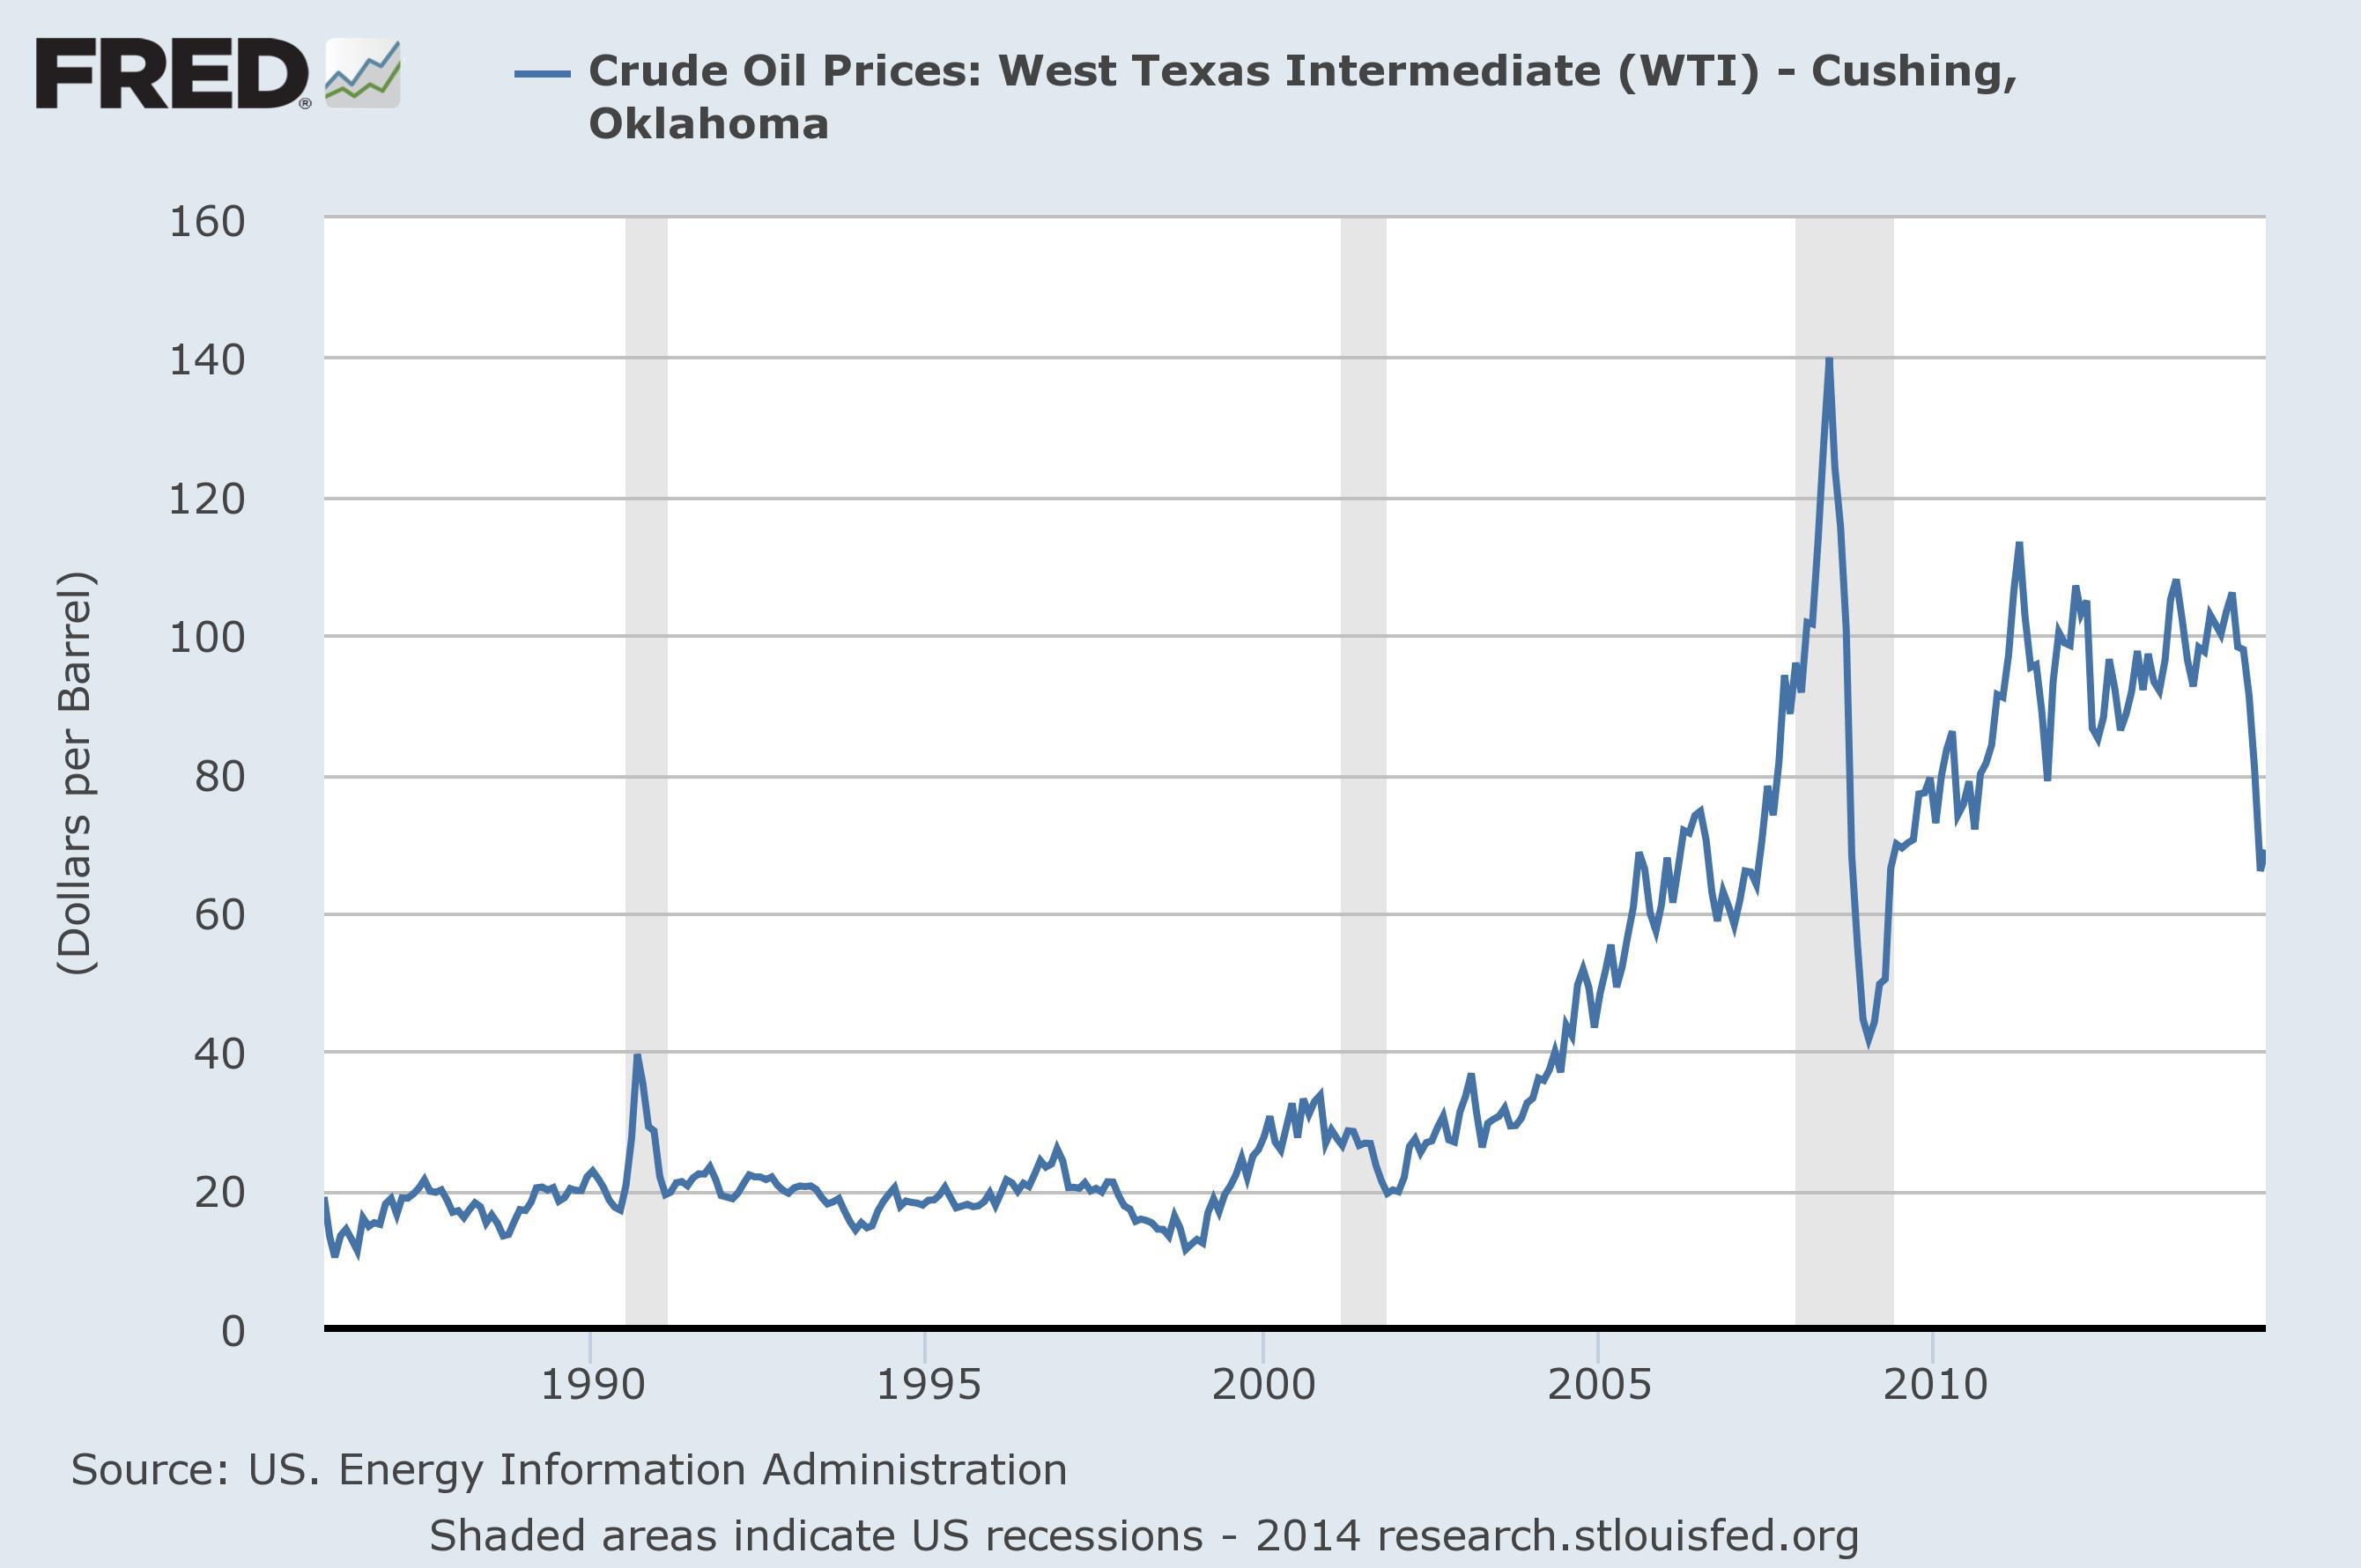 На диаграмме средняя цена нефти в 2015